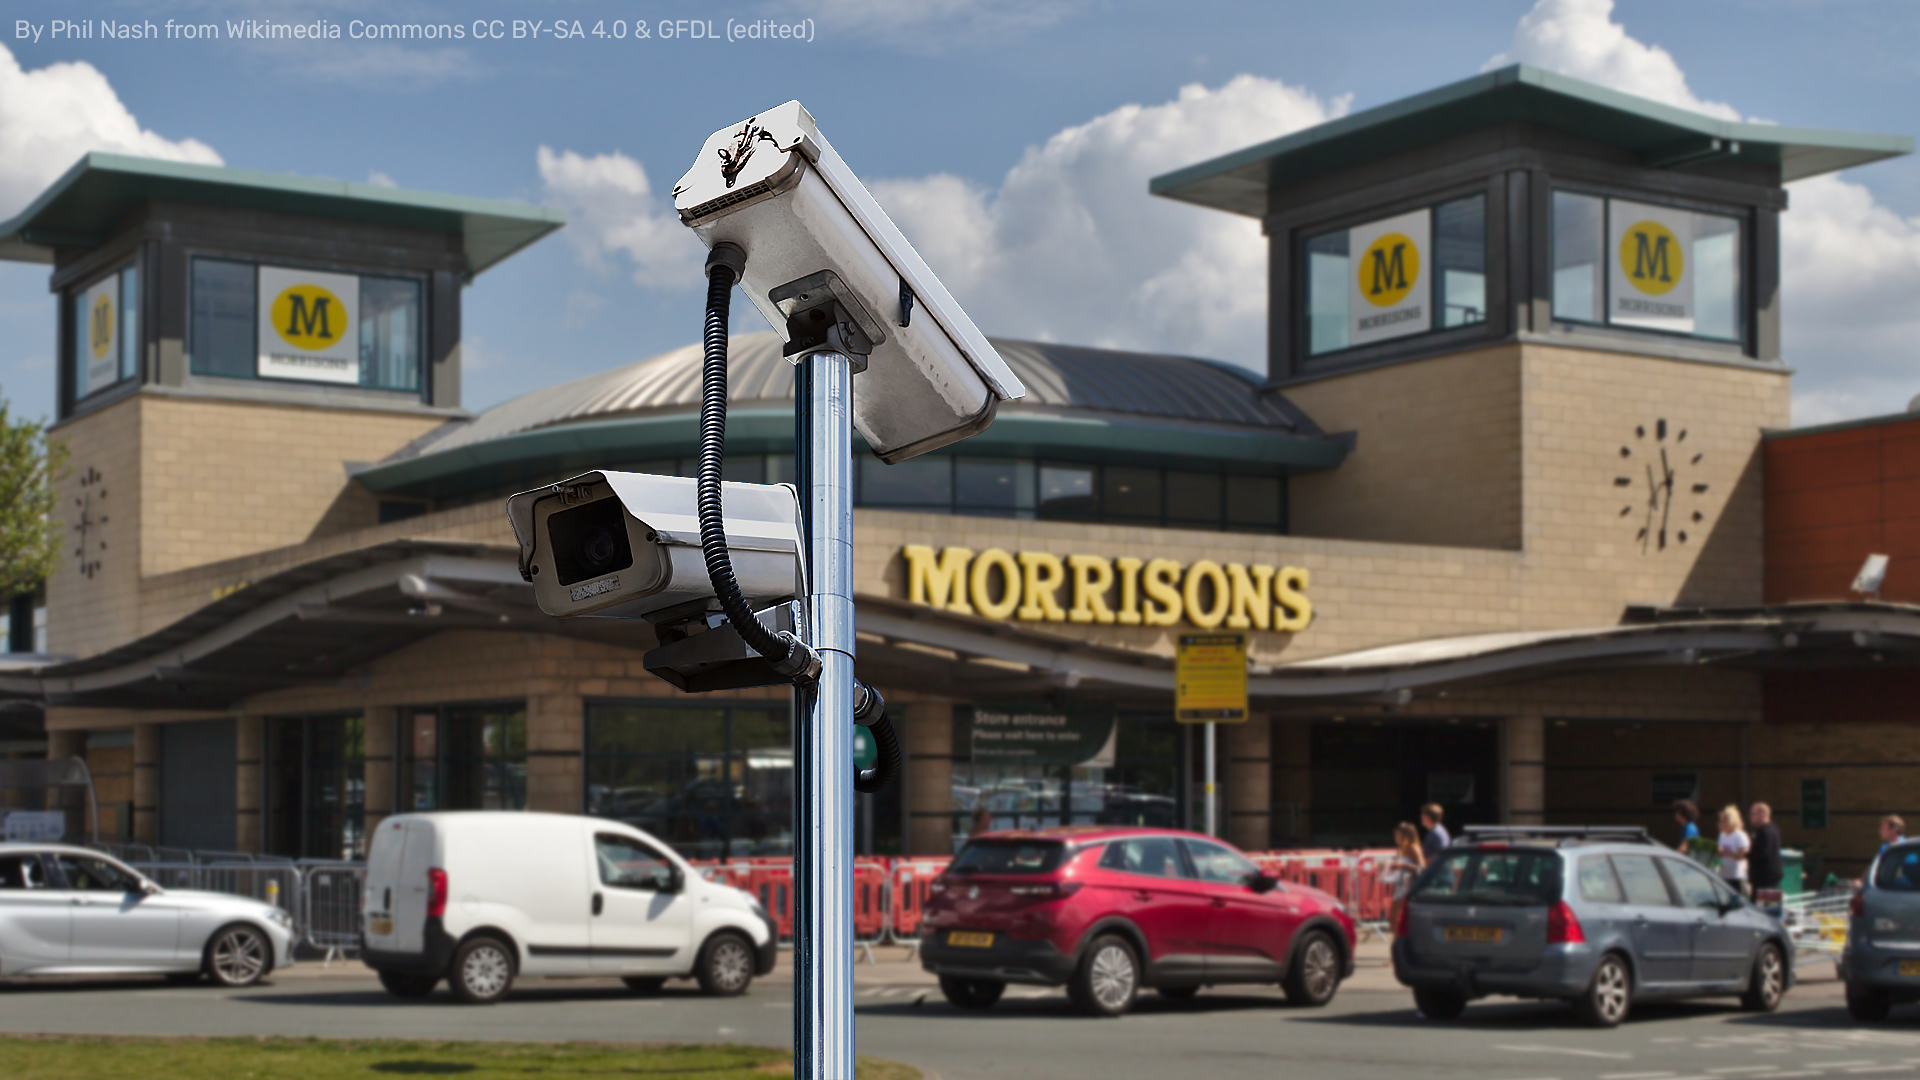 CCTV camera outside a Morrisons store (edited image).